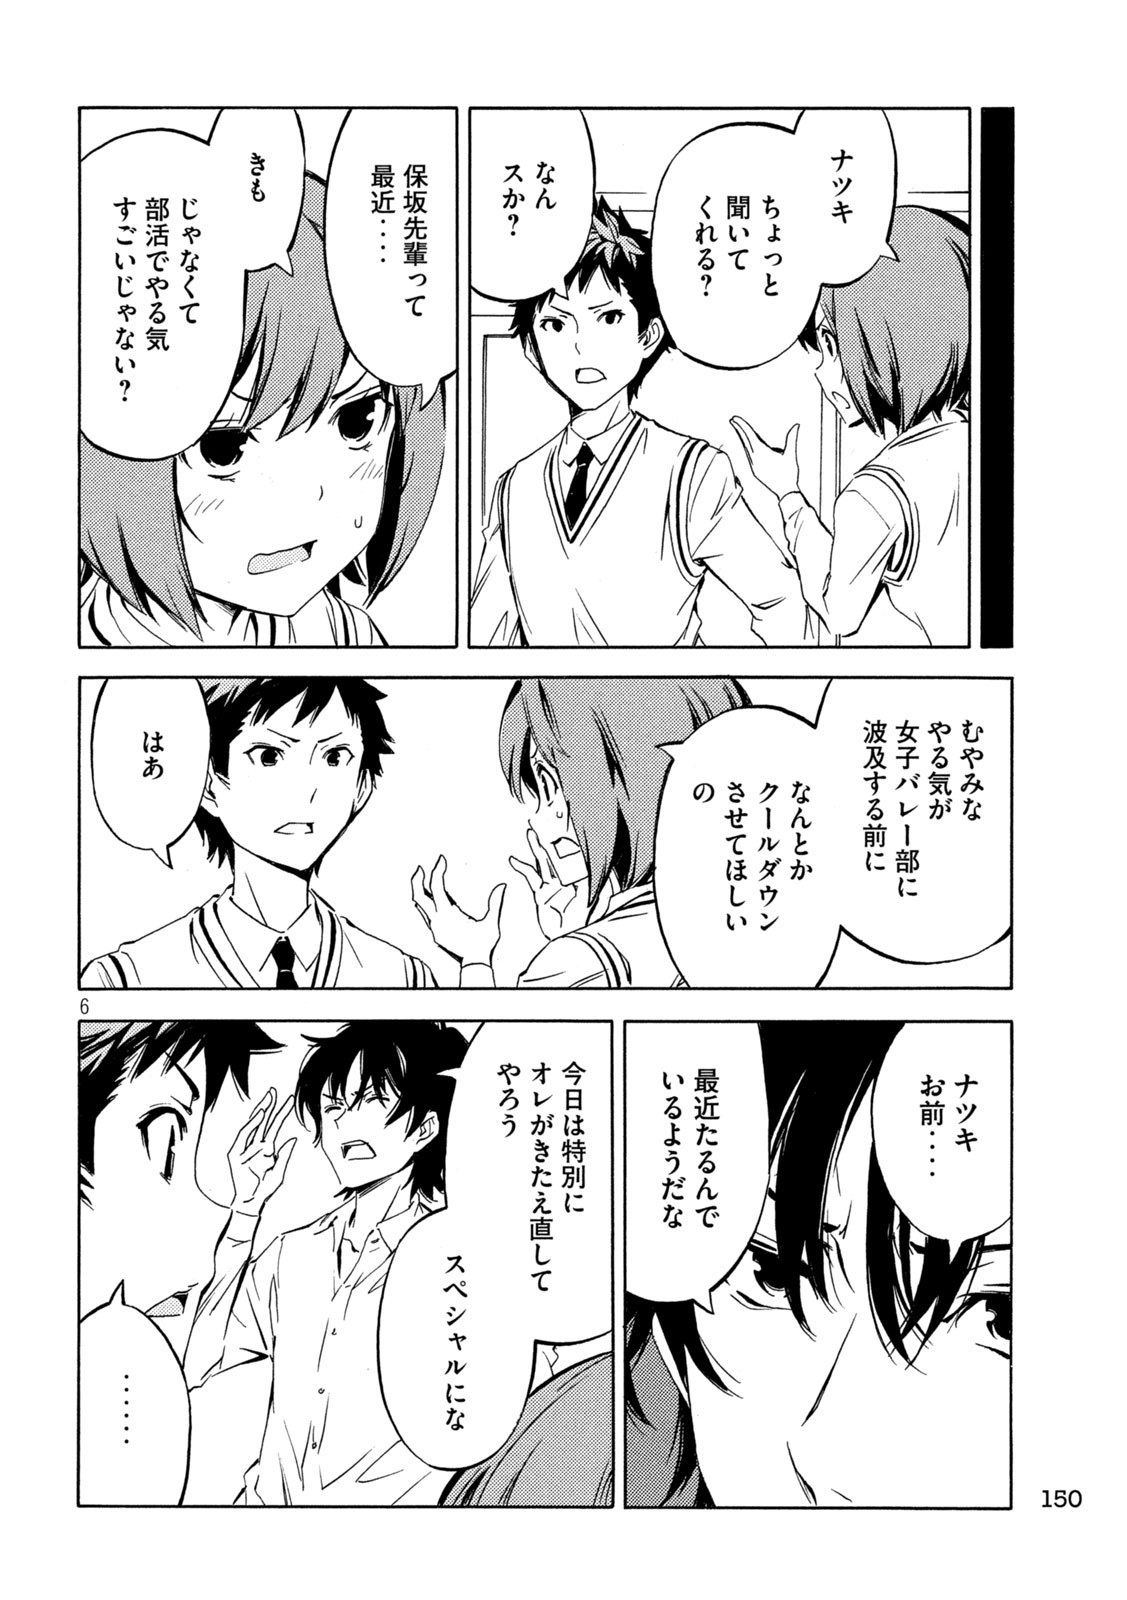 Minami-ke - Chapter 487 - Page 6